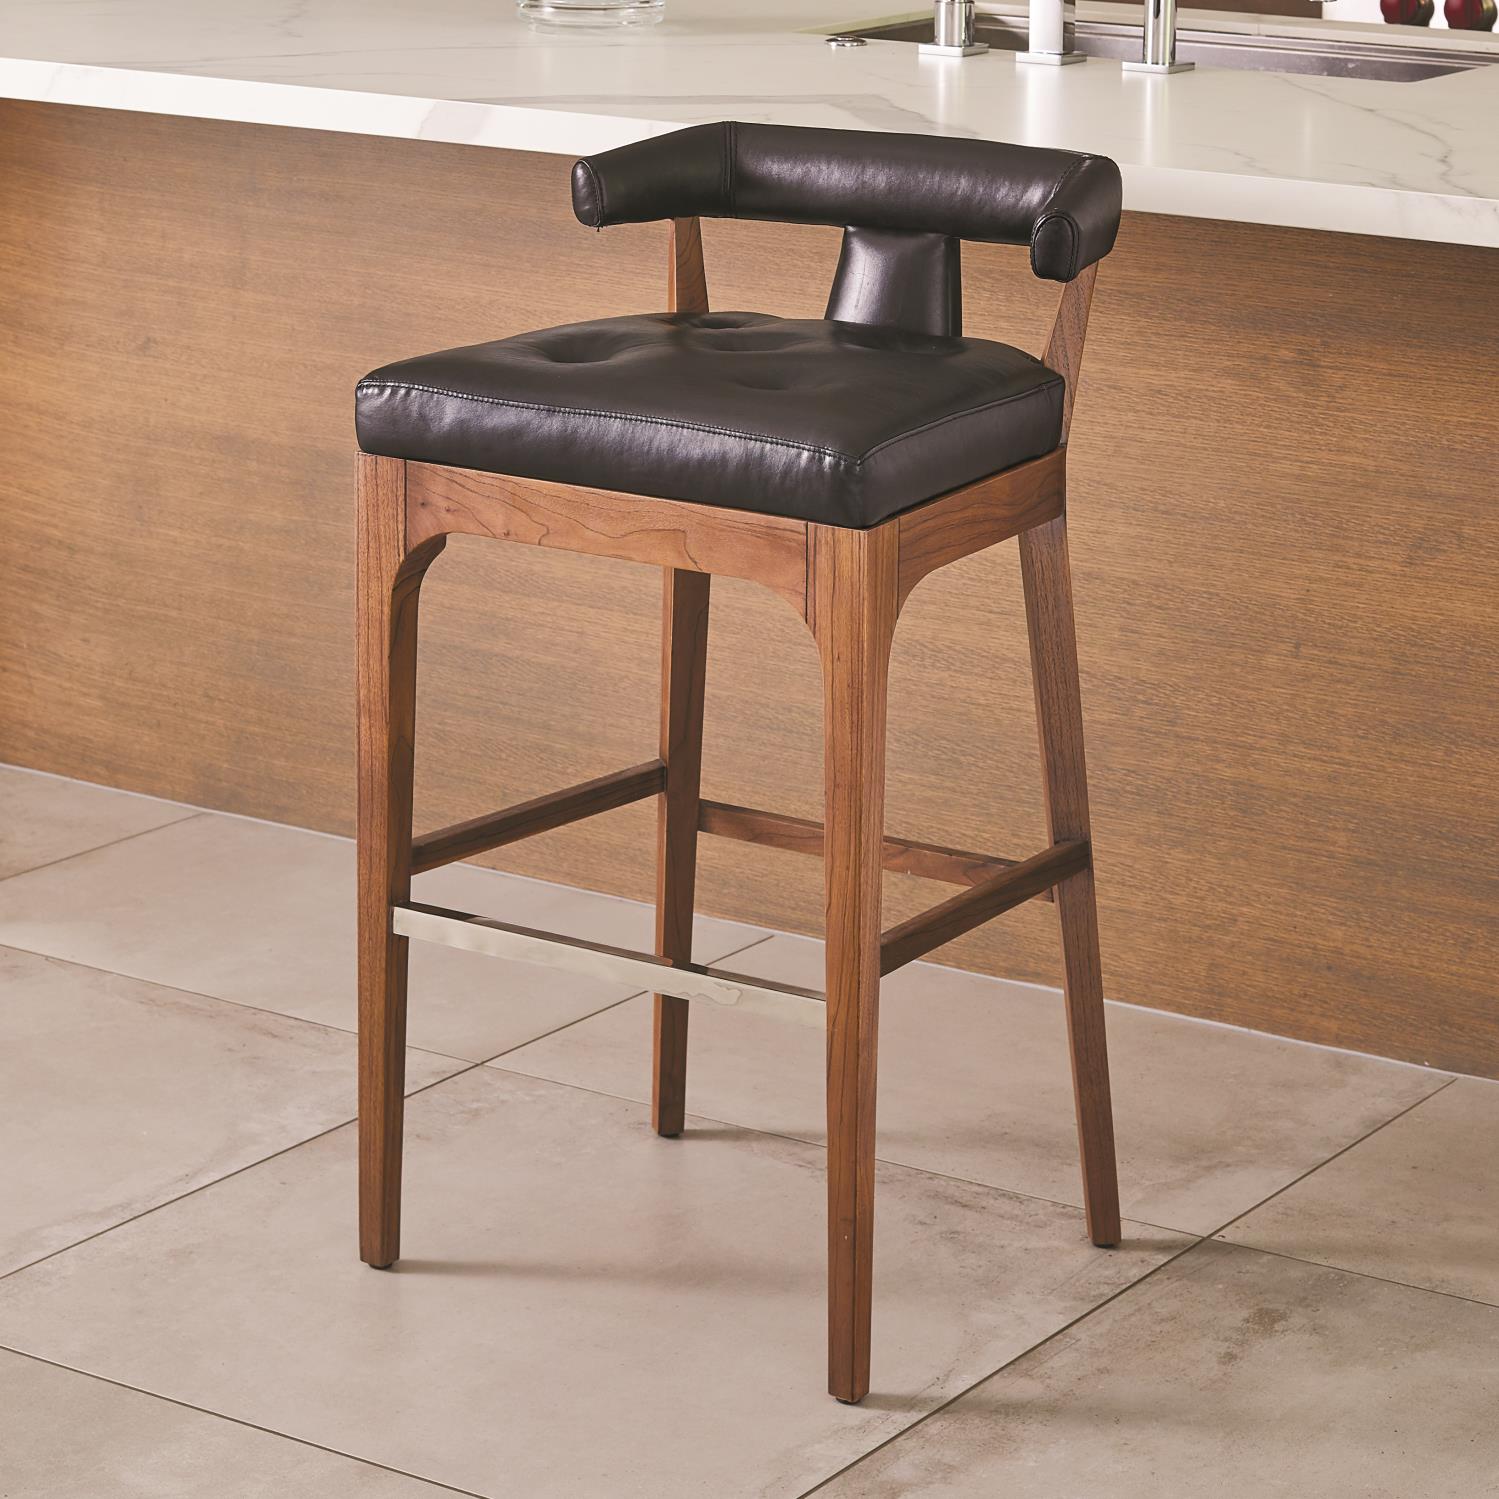 Moderno Bar Stool - Black Marble Leather - Grats Decor Interior Design & Build Inc.